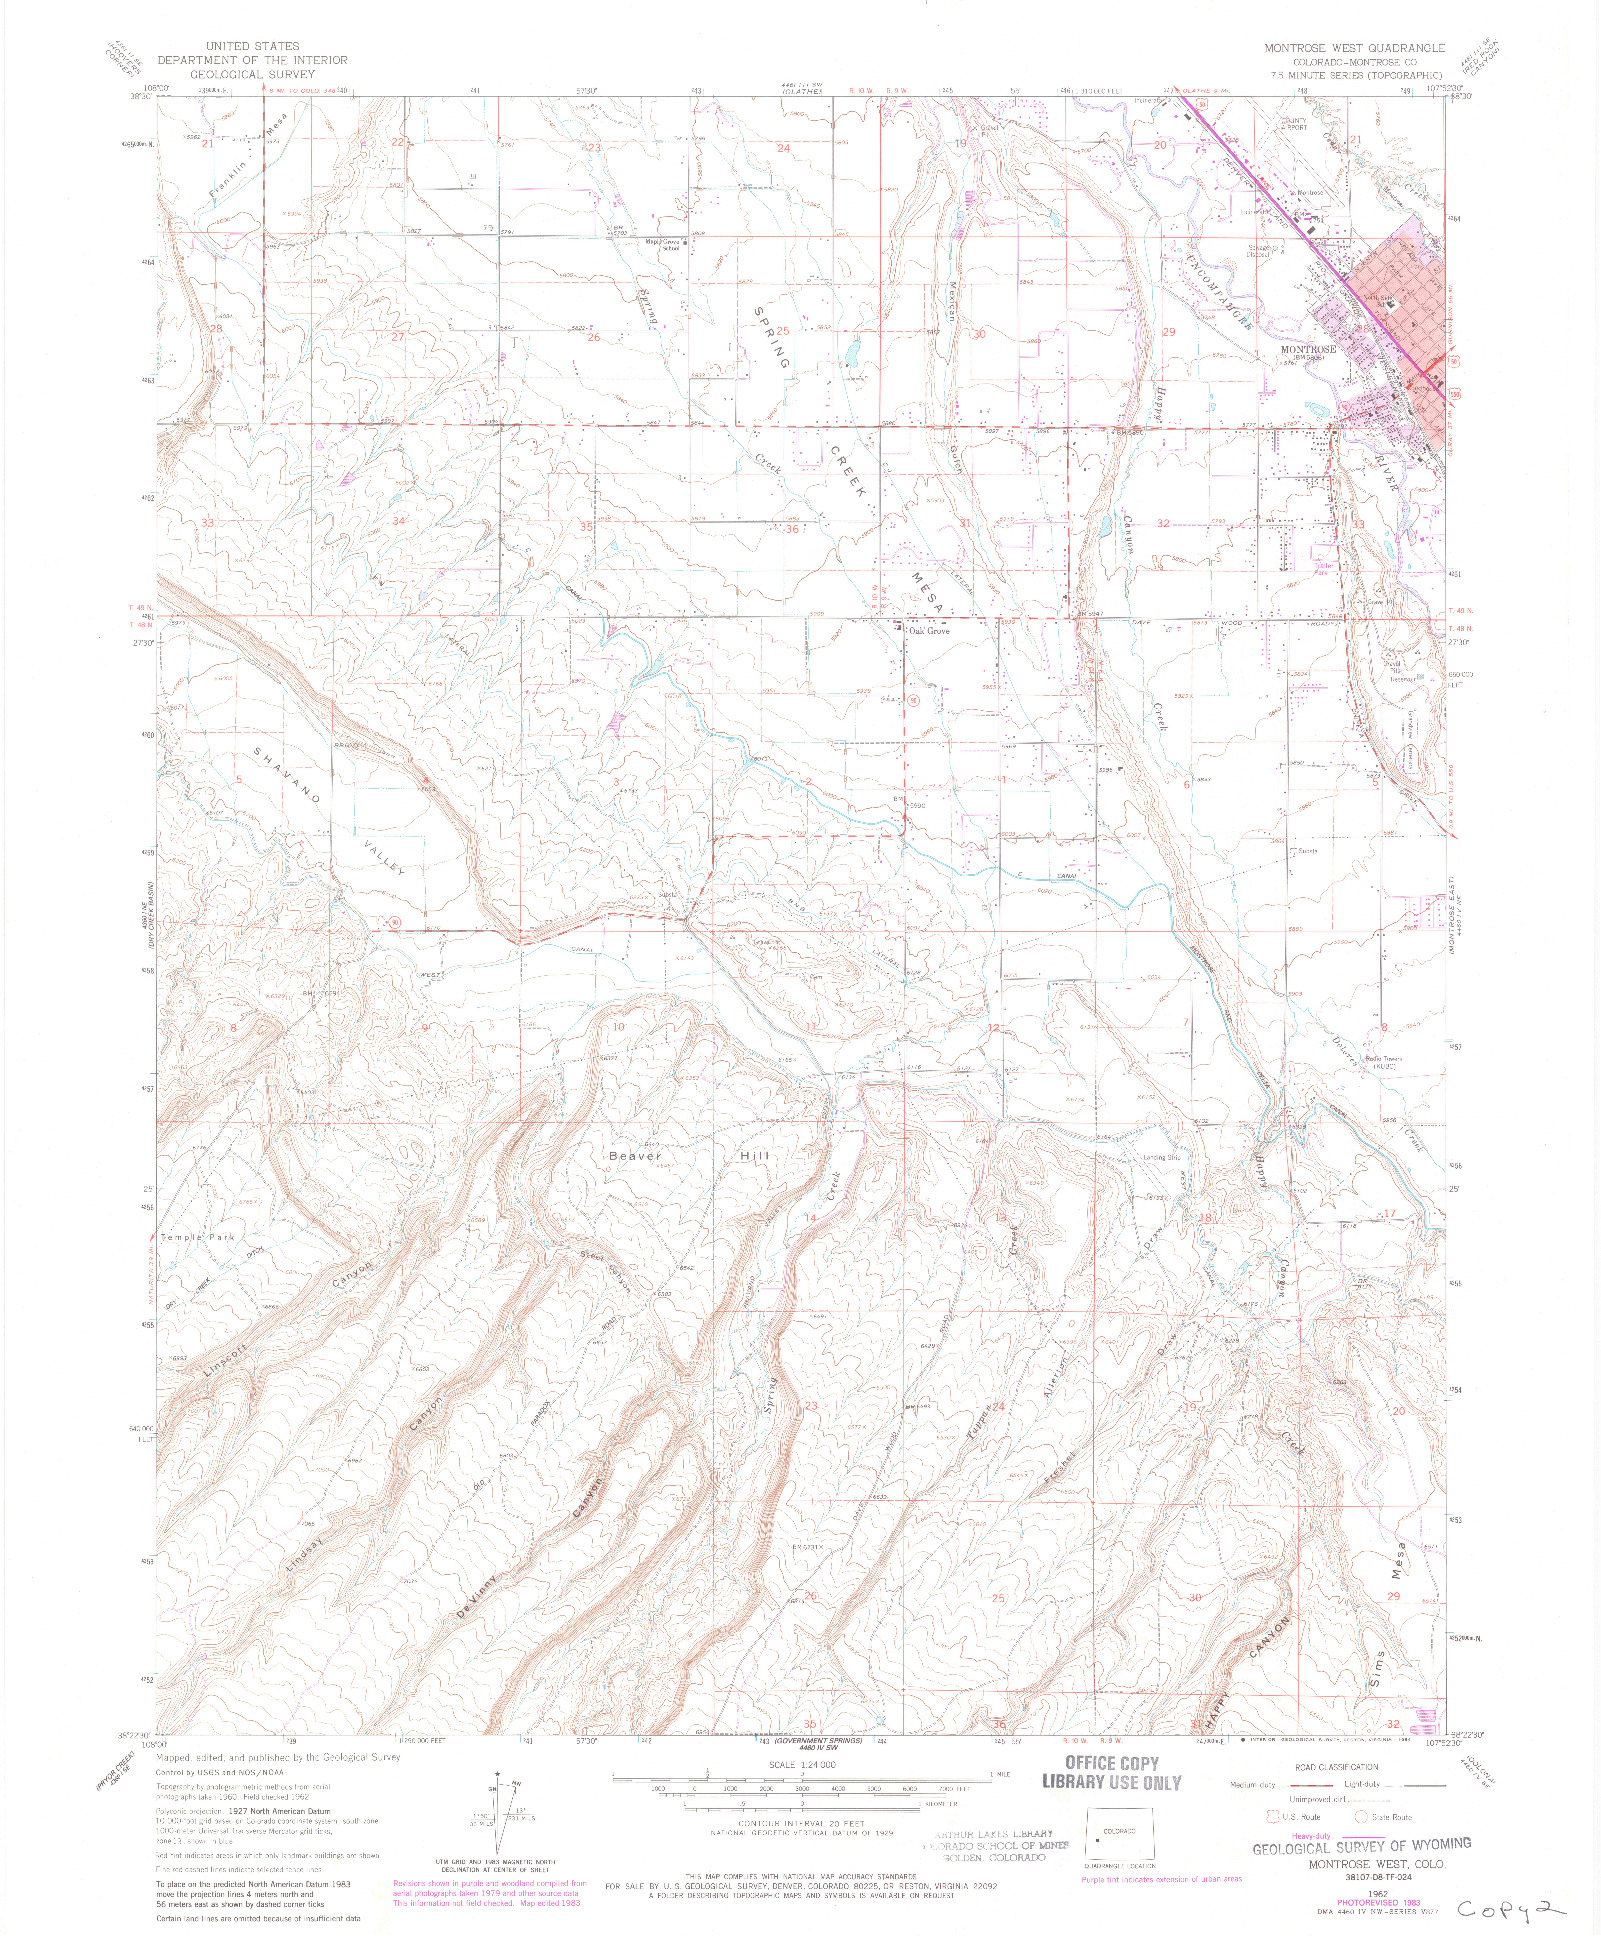 USGS 1:24000-SCALE QUADRANGLE FOR MONTROSE WEST, CO 1962